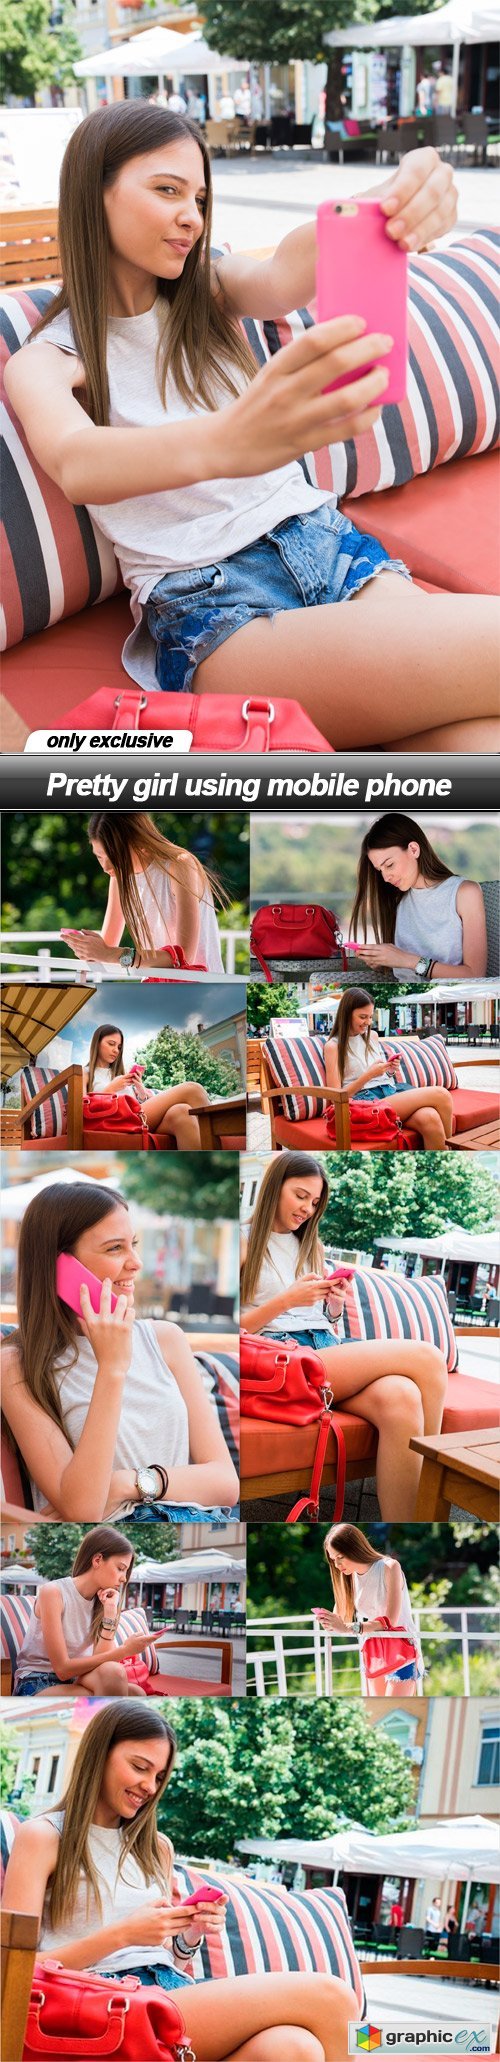 Pretty girl using mobile phone - 10 UHQ JPEG